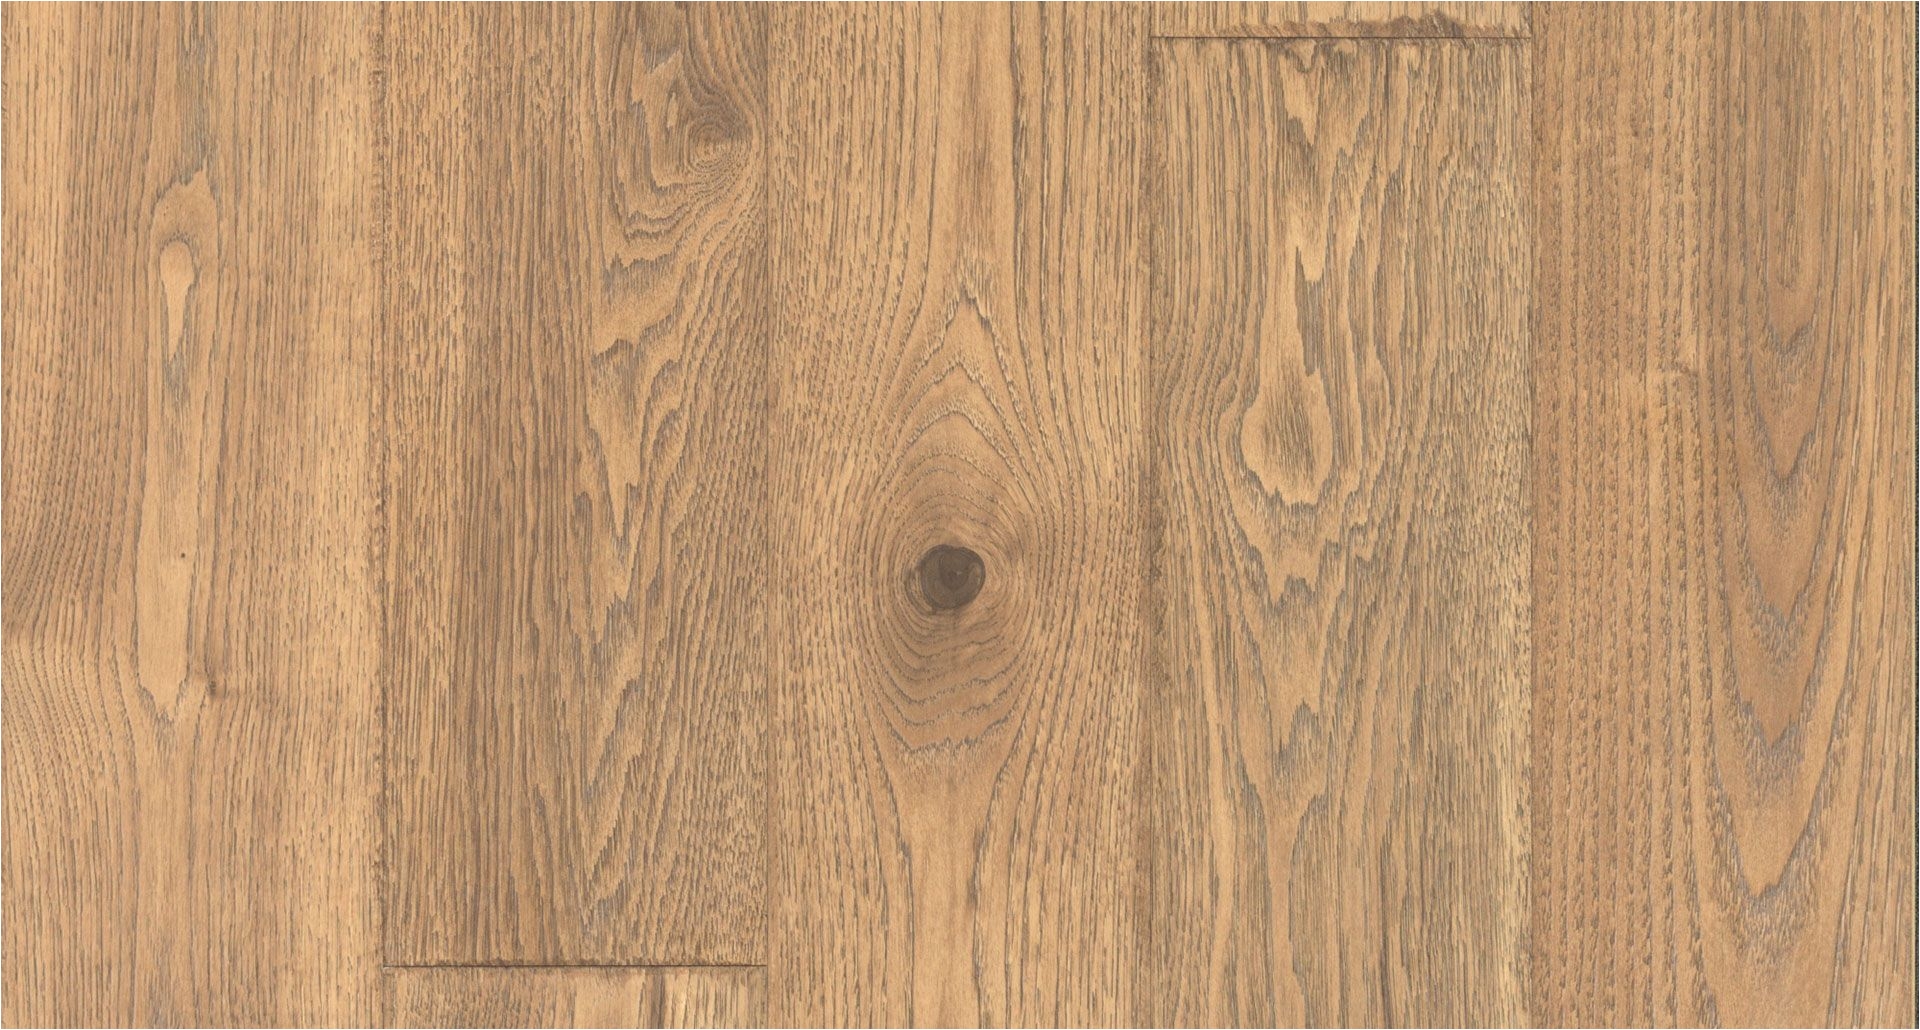 Homemade Laminate Floor Polish Brier Creek Oak Laminate Floor Natural Wood Look 12mm Thick 1